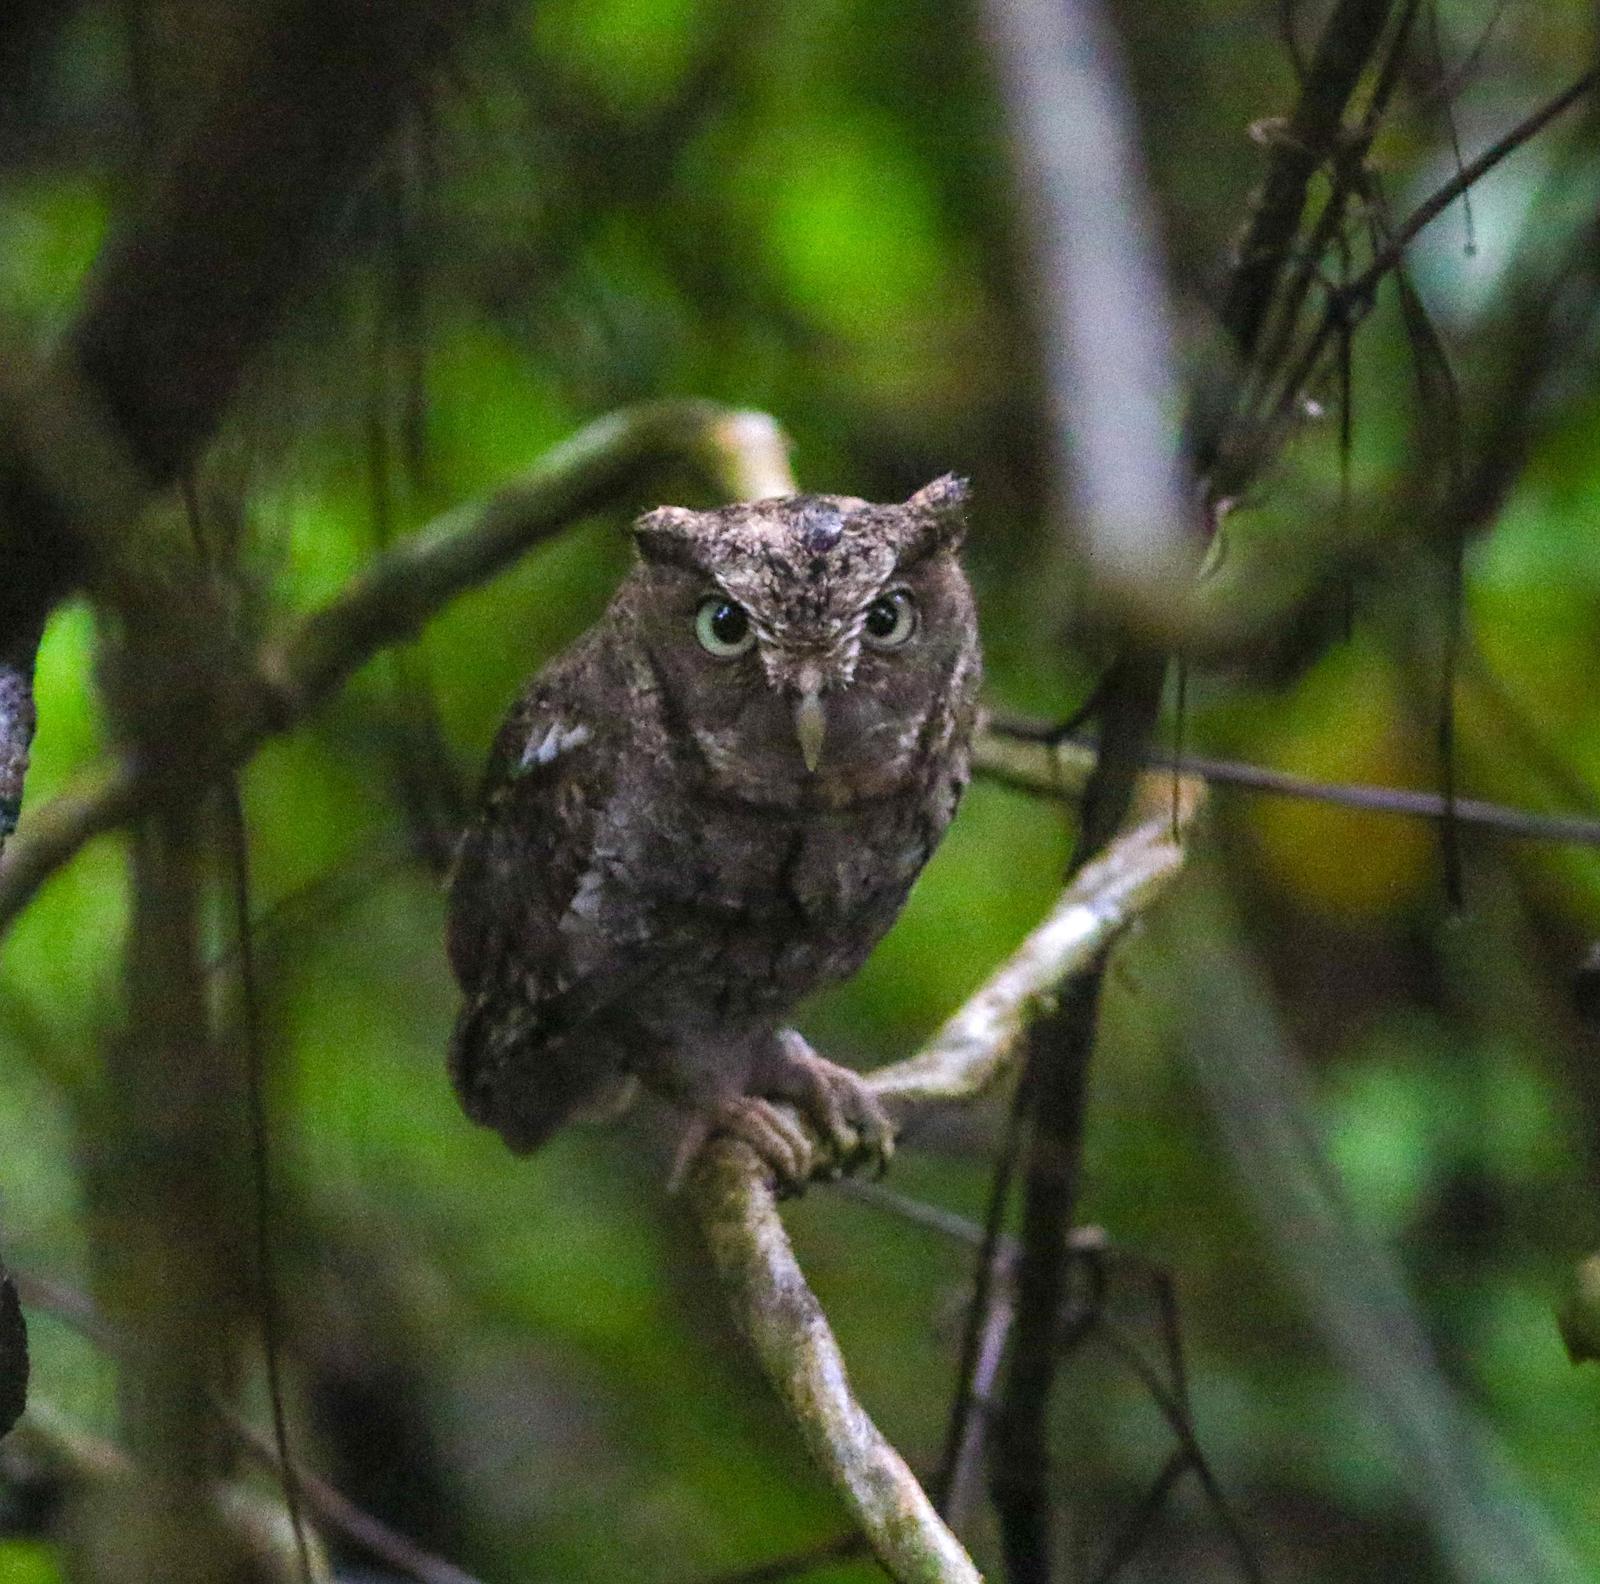 Middle American Screech-Owl Photo by Leonardo Garrigues